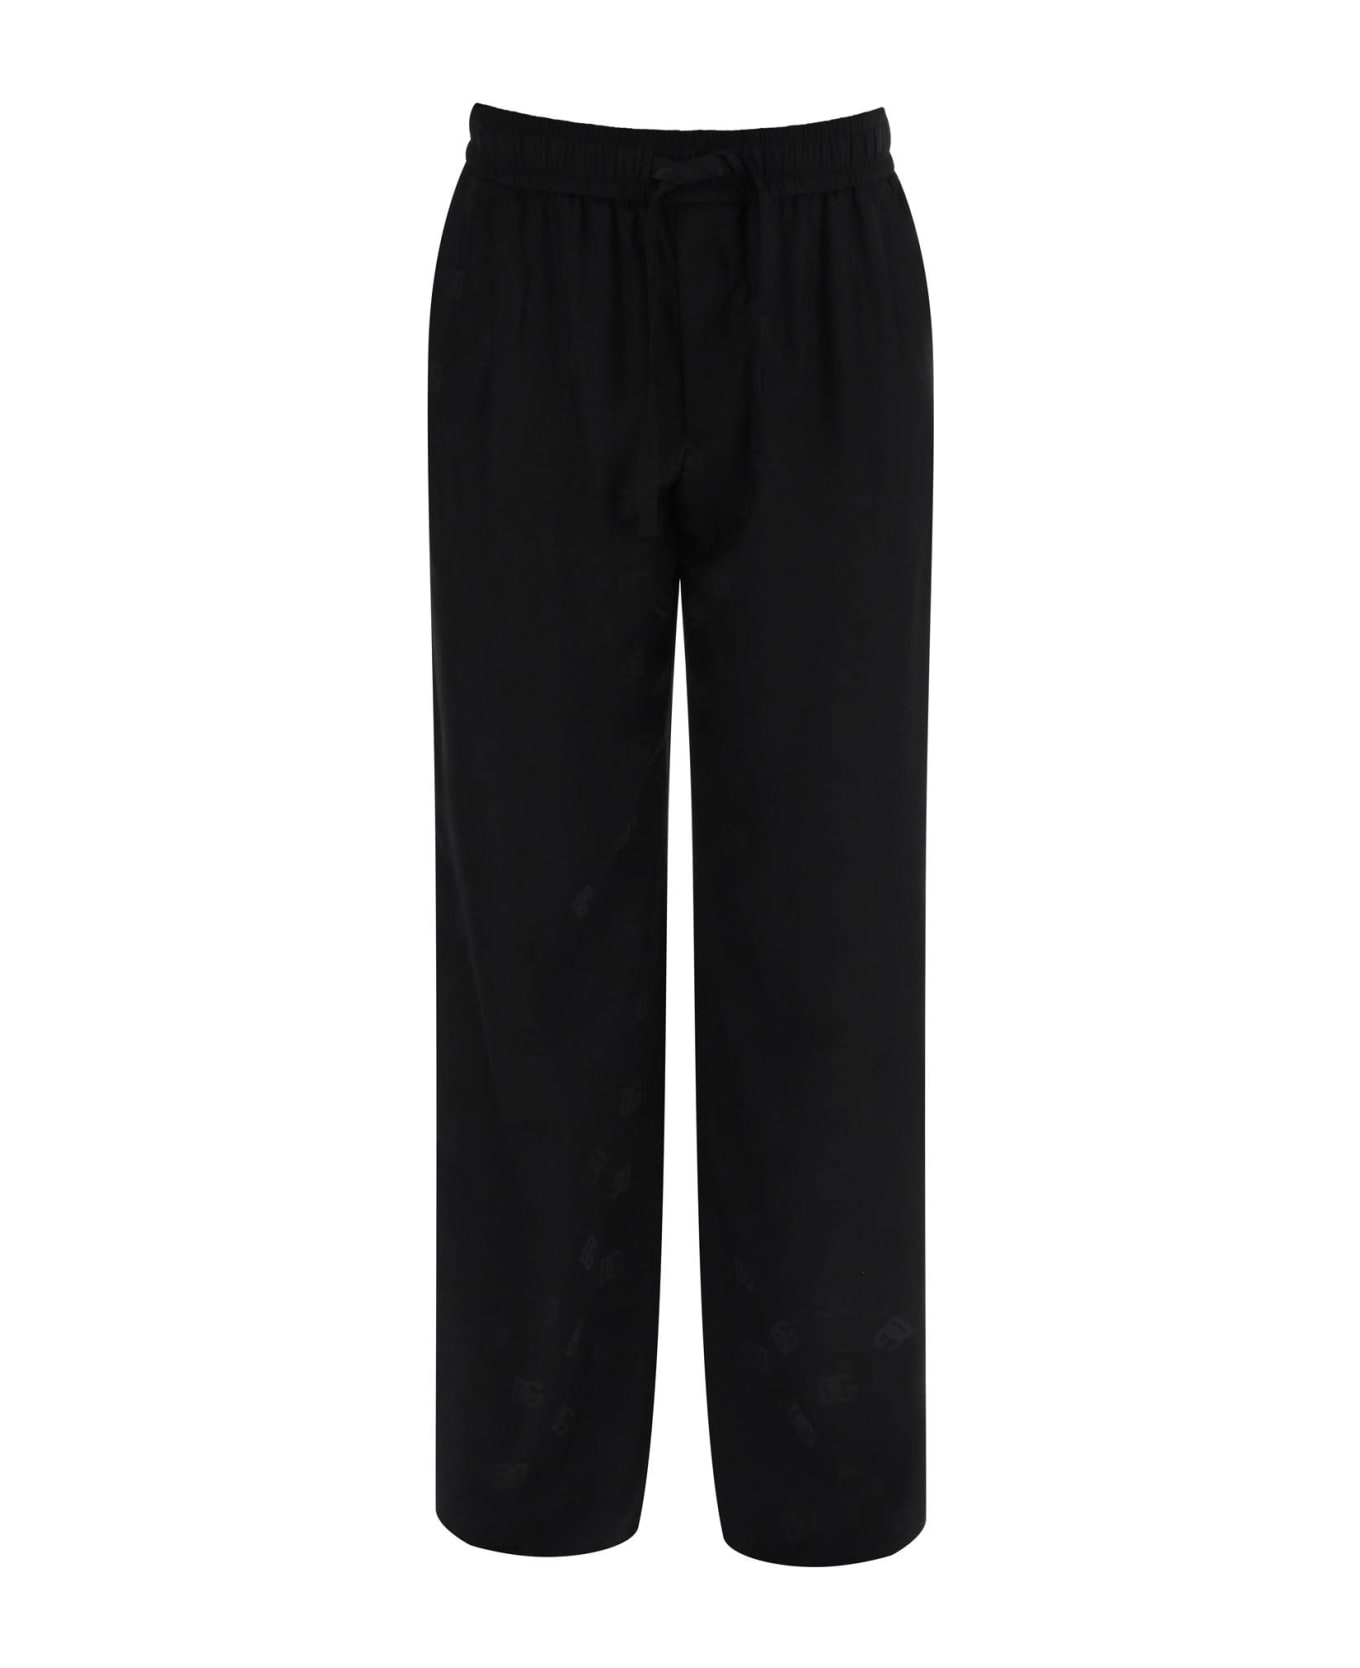 Dolce & Gabbana Dg Jacquard Pants - NERO (Black)